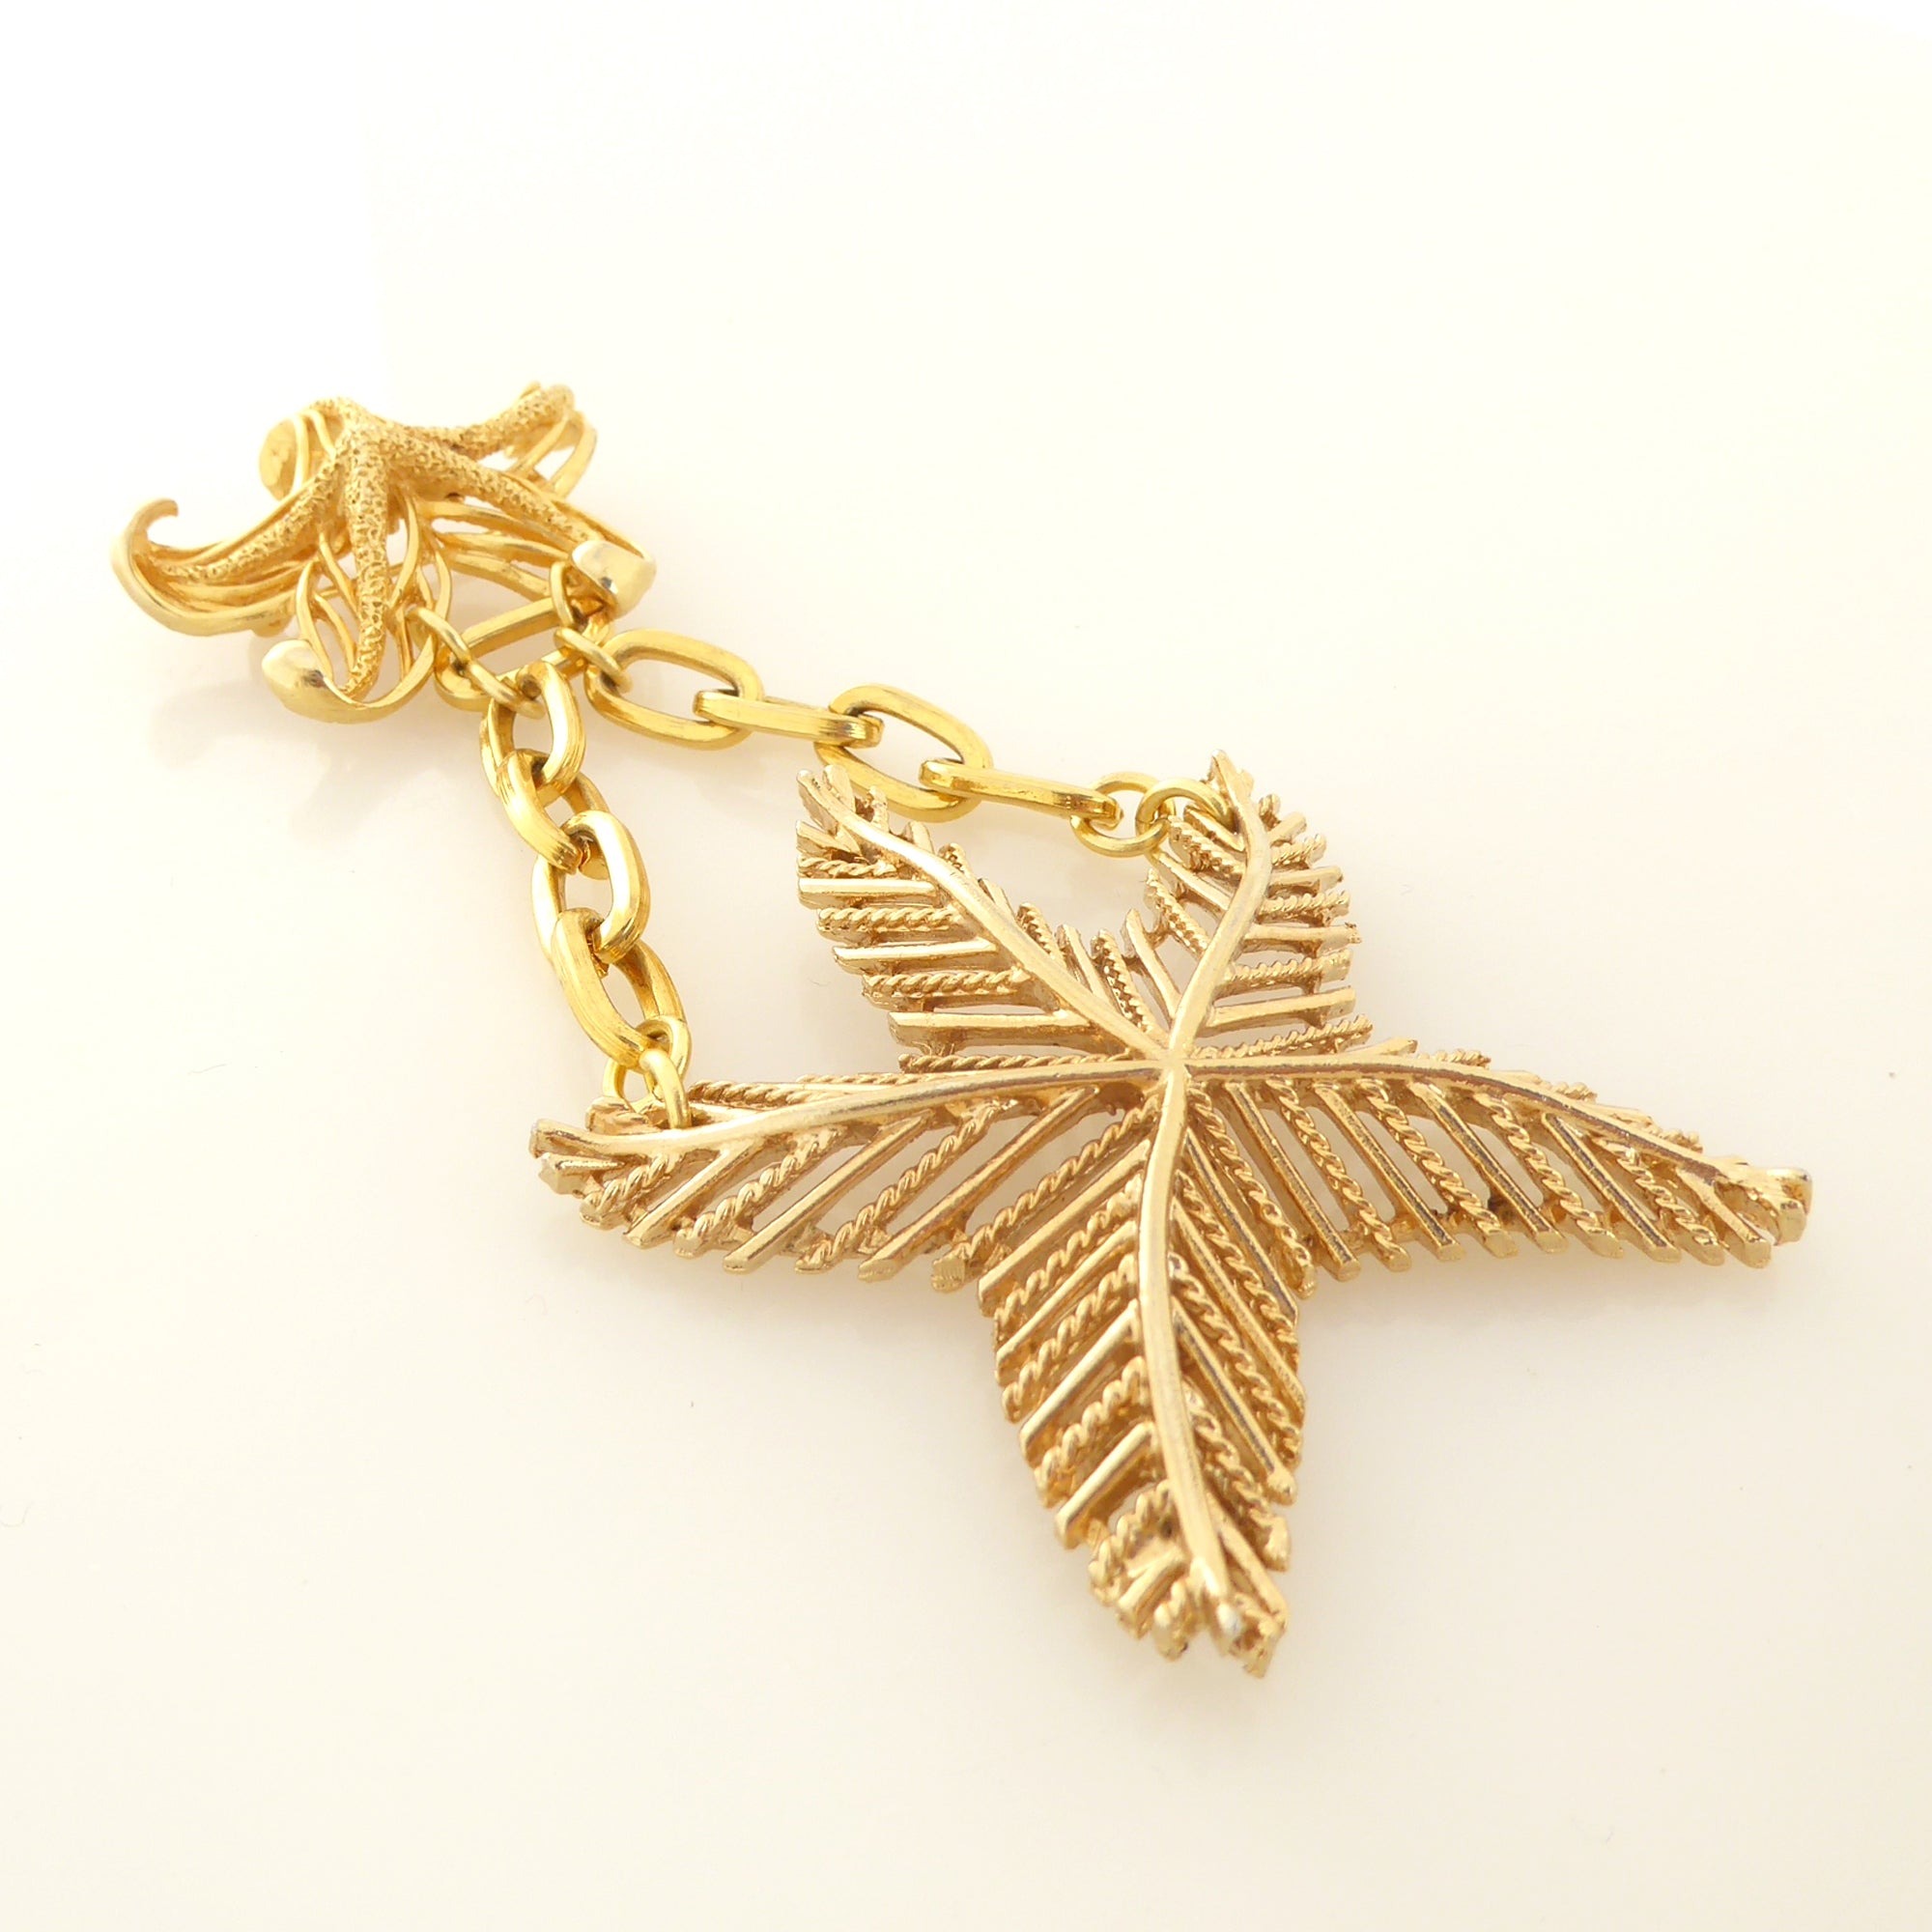 Gold starfish brooch by Jenny Dayco 2